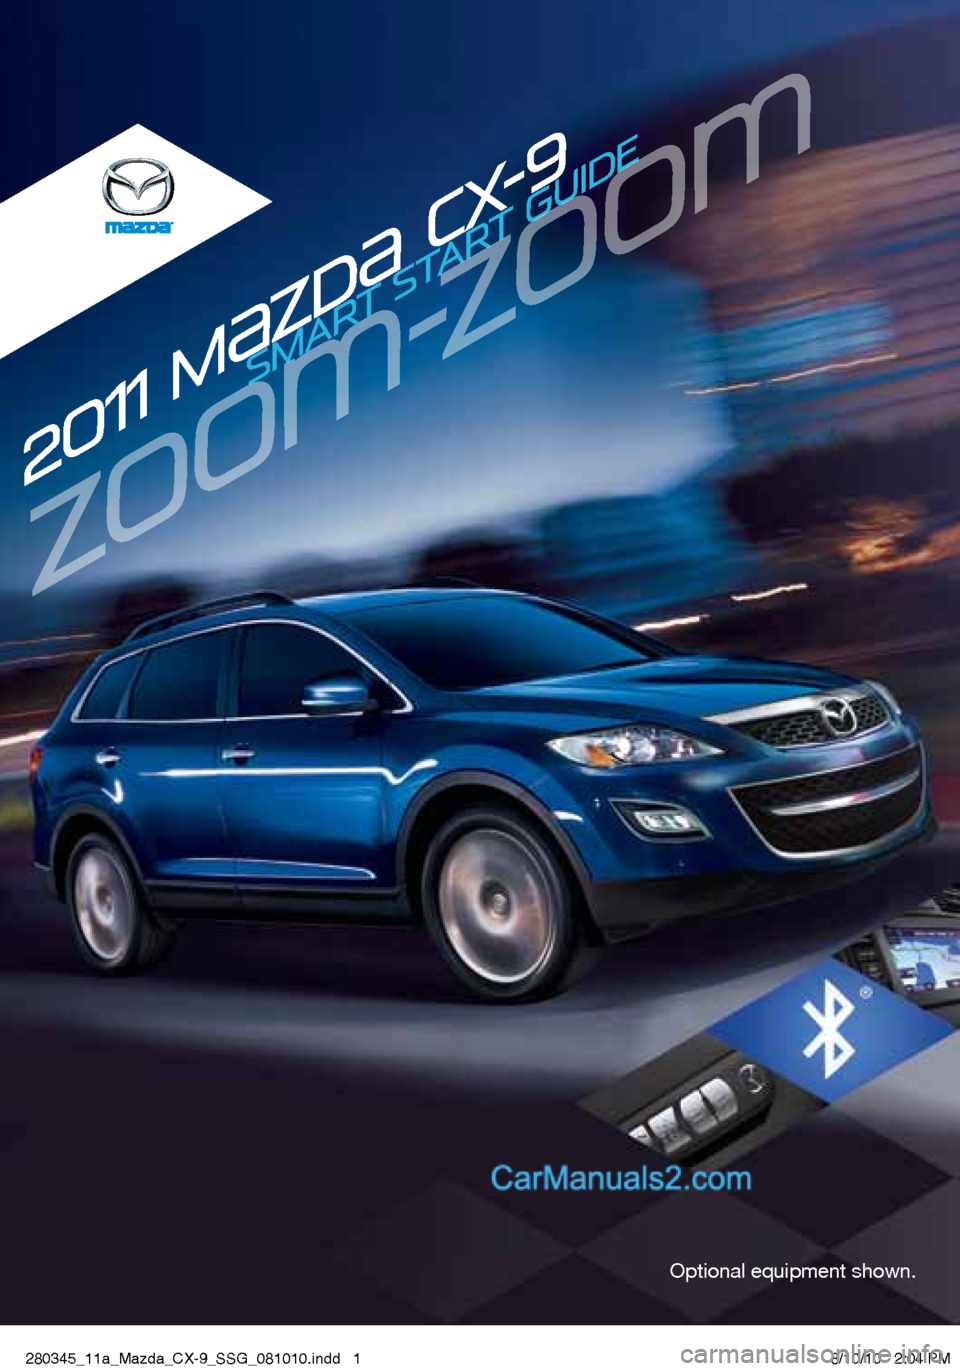 MAZDA MODEL CX-9 2011  Smart Start Guide (in English) 2011 m{ZD{  Cx-9
SMART START GUIDE
Optional equipment shown.
280345_11a_Mazda_CX-9_SSG_081010.indd   18/10/10   2:04 PM
zoo}-zoo}   